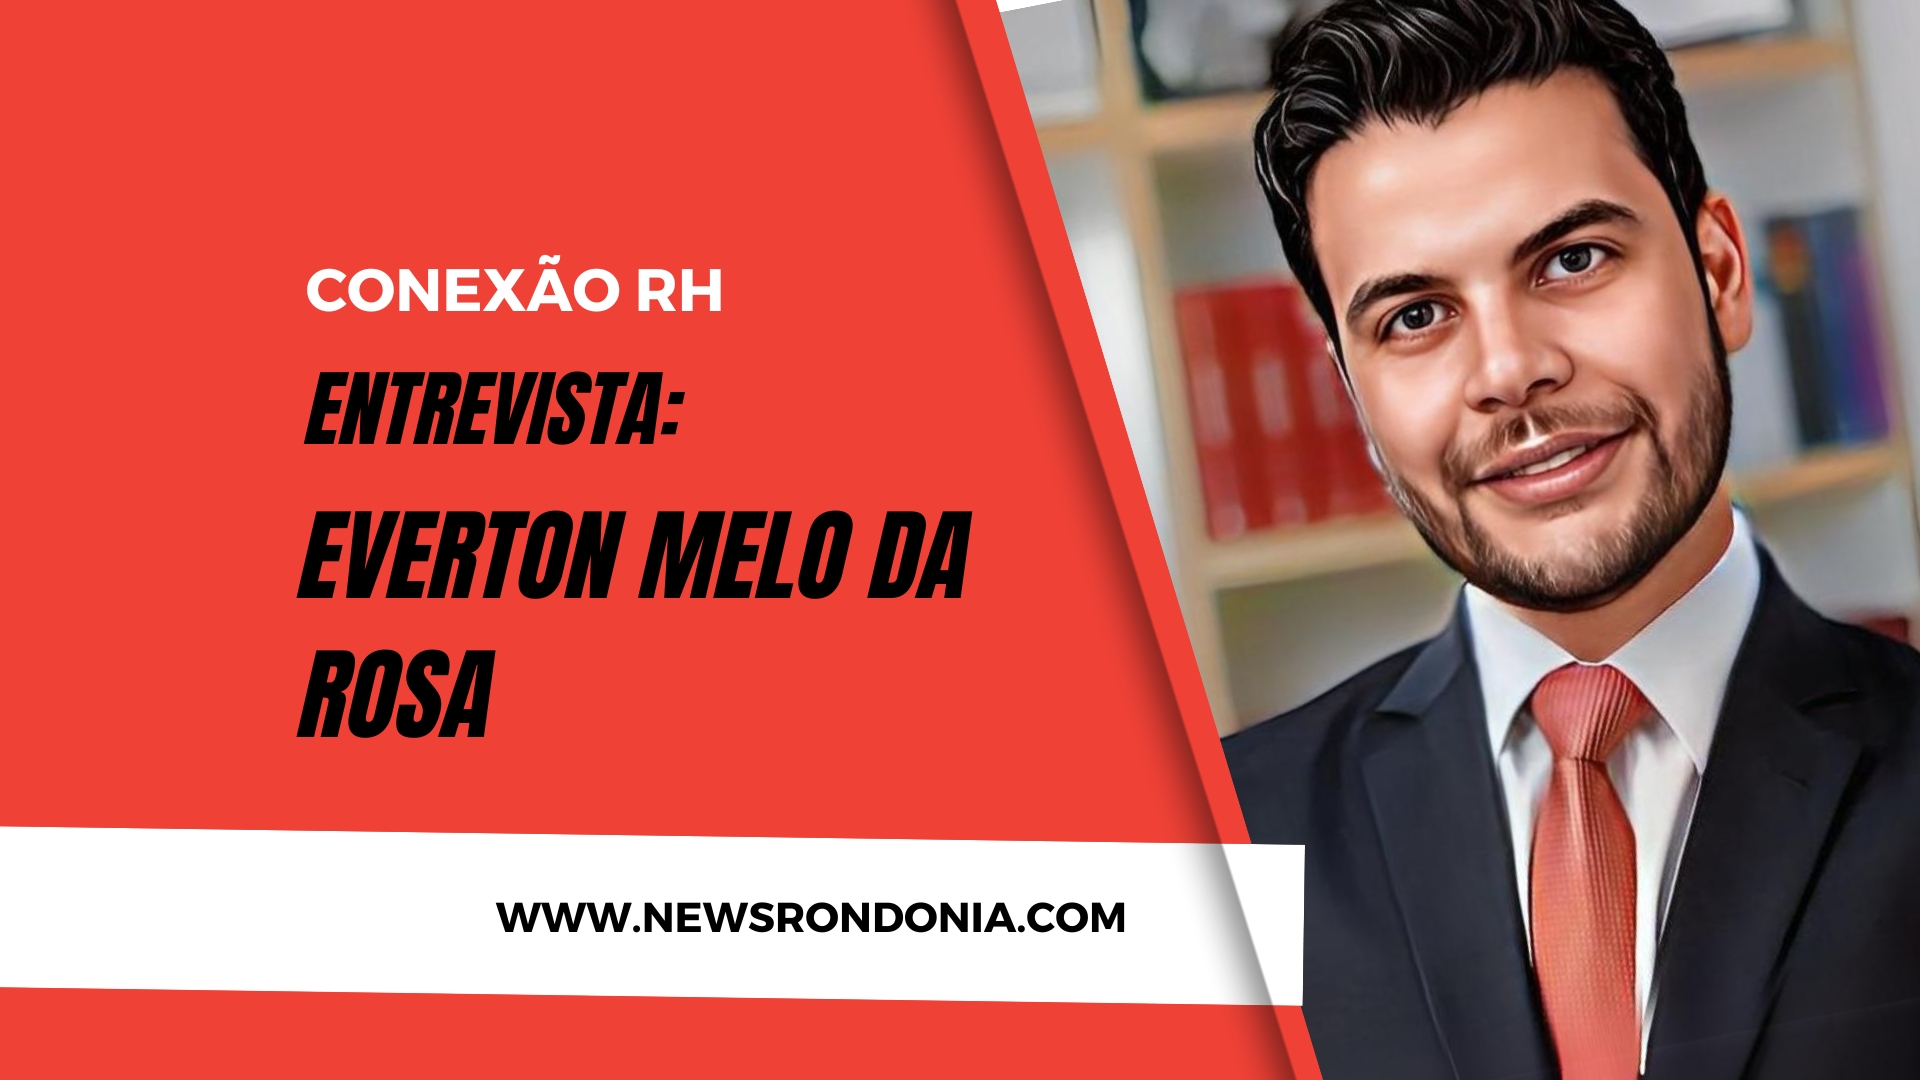 Conexão RH entrevista: Everton Melo da Rosa